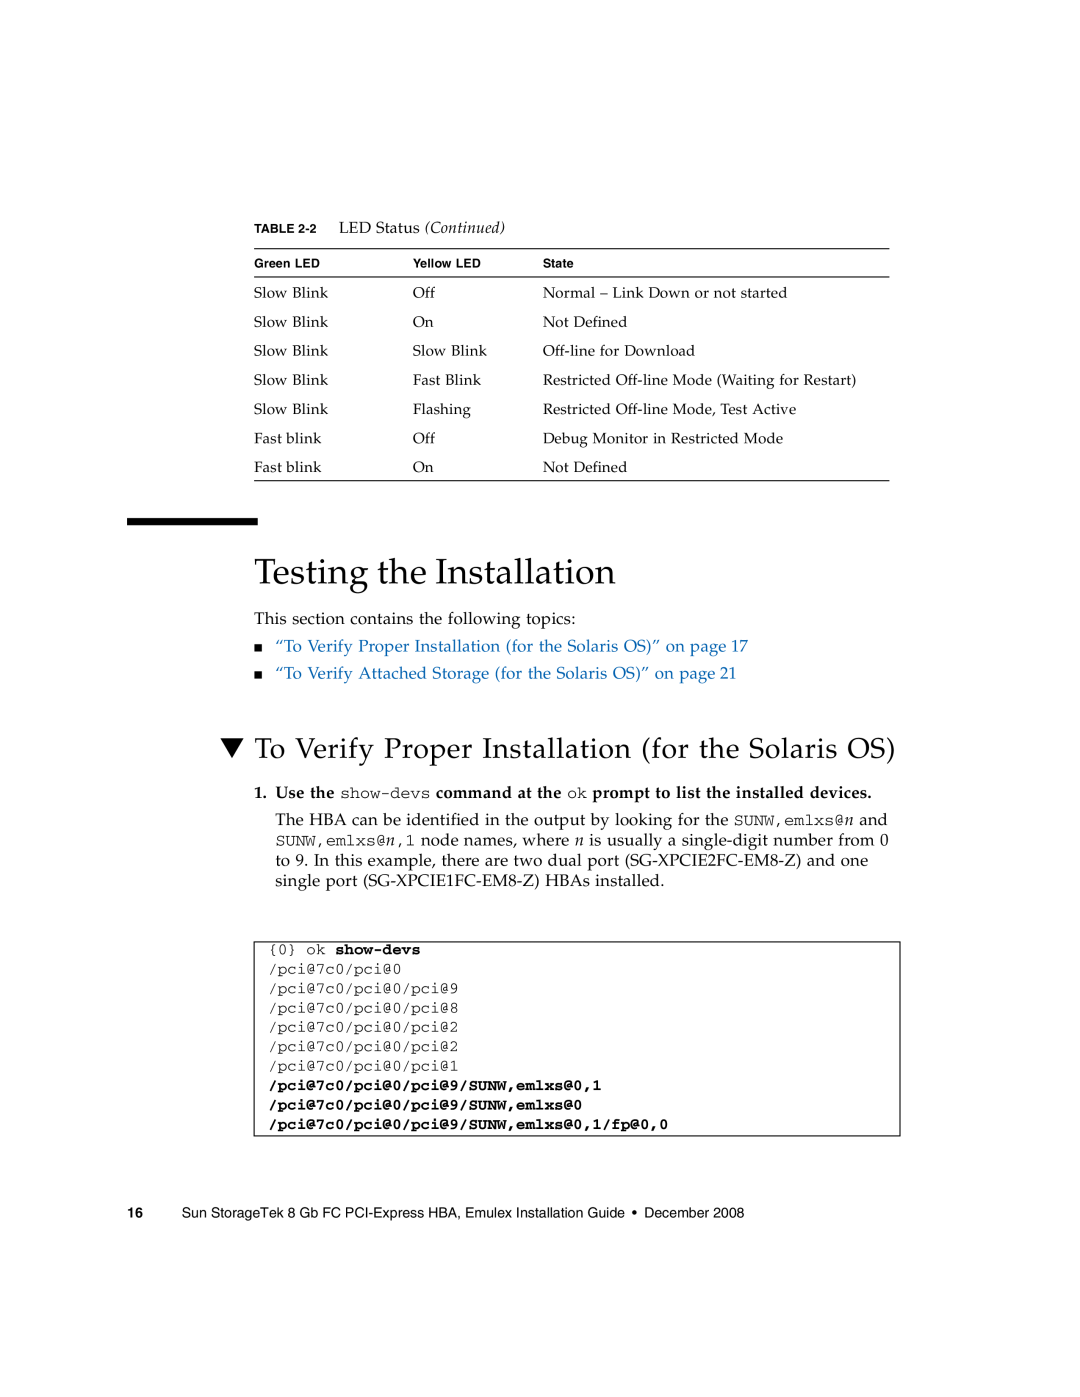 Sun Microsystems SG-XPCIE2FC-EM8-Z manual Testing the Installation, To Verify Proper Installation for the Solaris OS 